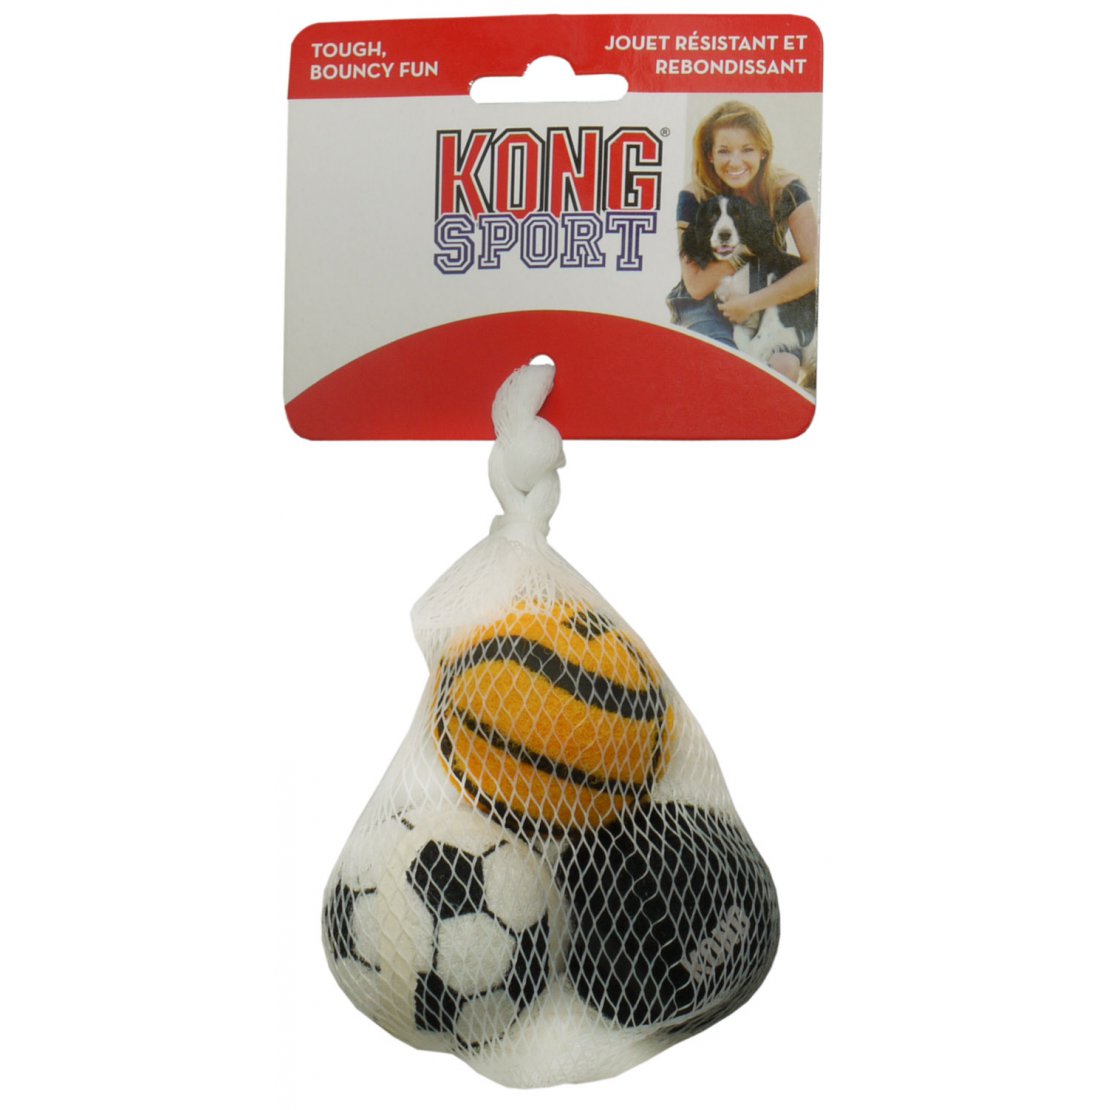 Kong Sport Balls Dog Toy